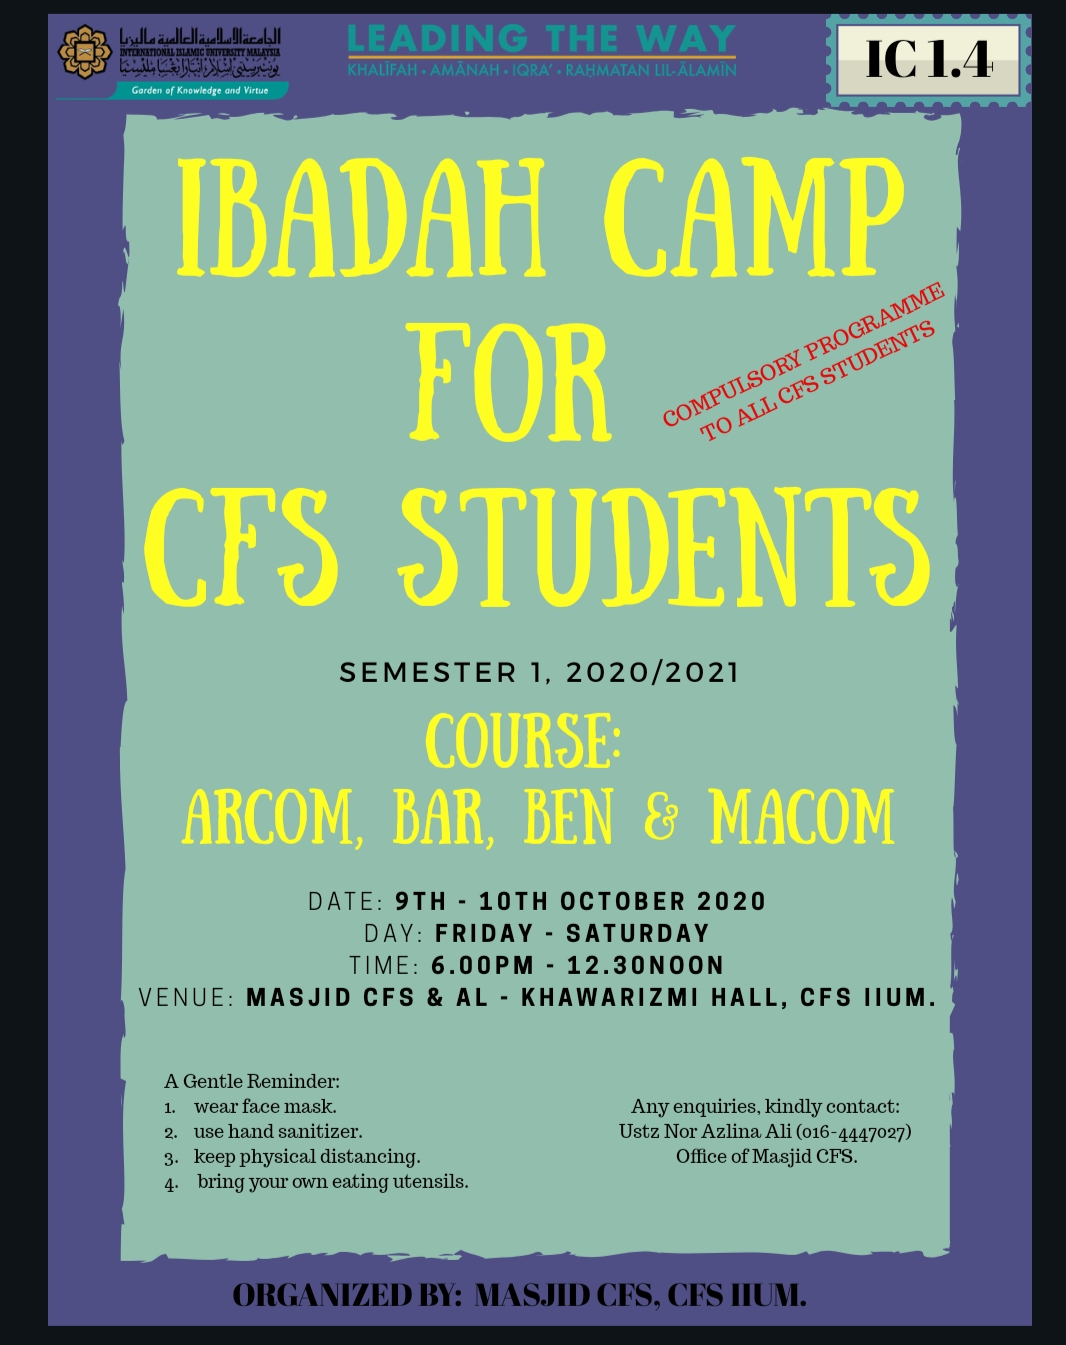 IBADAH CAMP FOR CFS STUDENTS (ARCOM, BAR, BEN & MACOM)